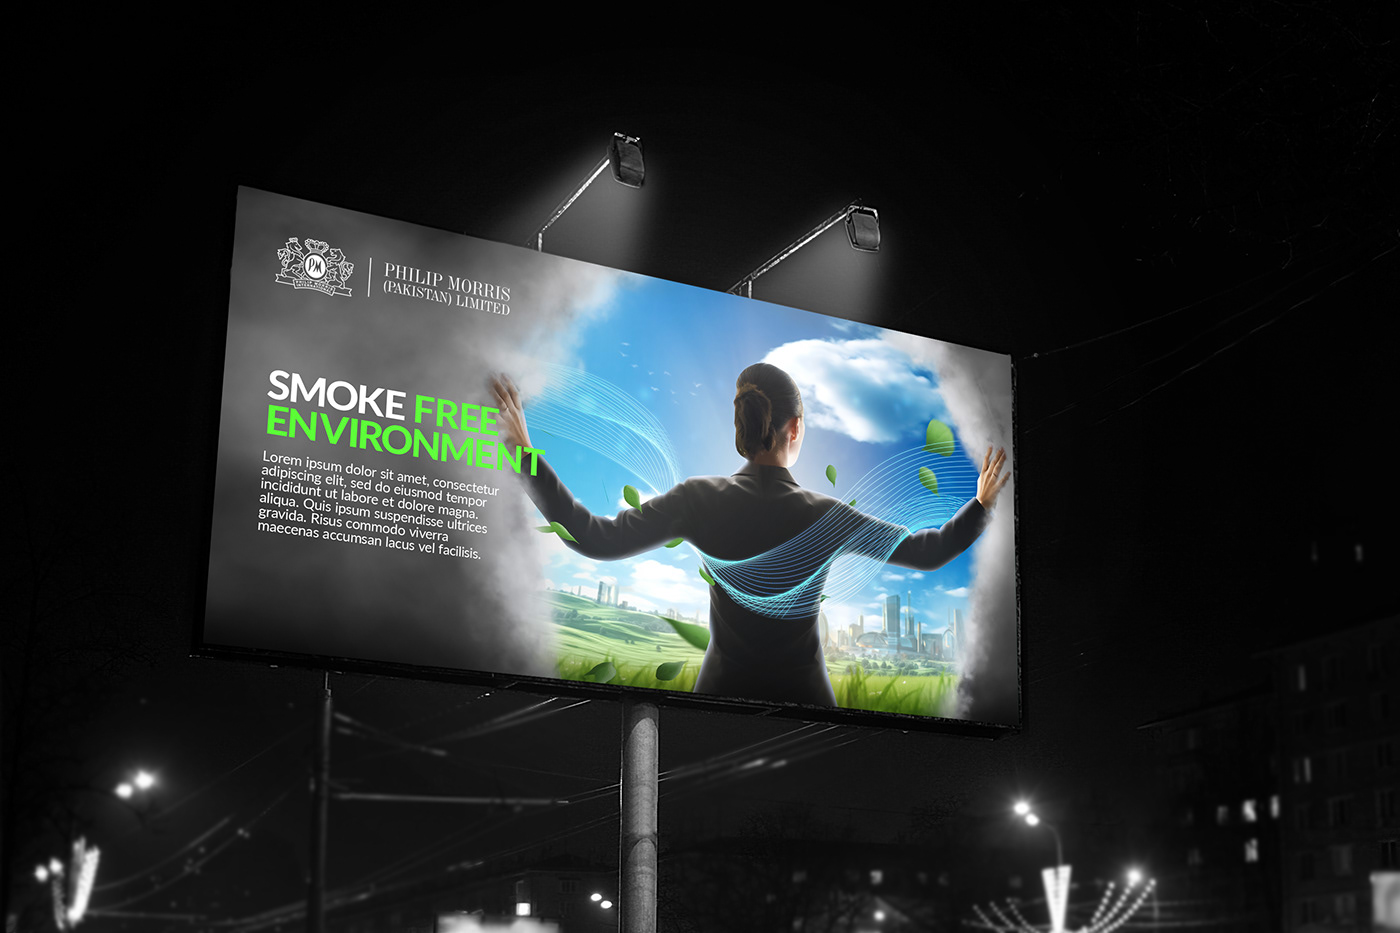 cigarette PMI marlboro eco friendly environment Sustainability Social media post key visual Phillip Morris smokefree